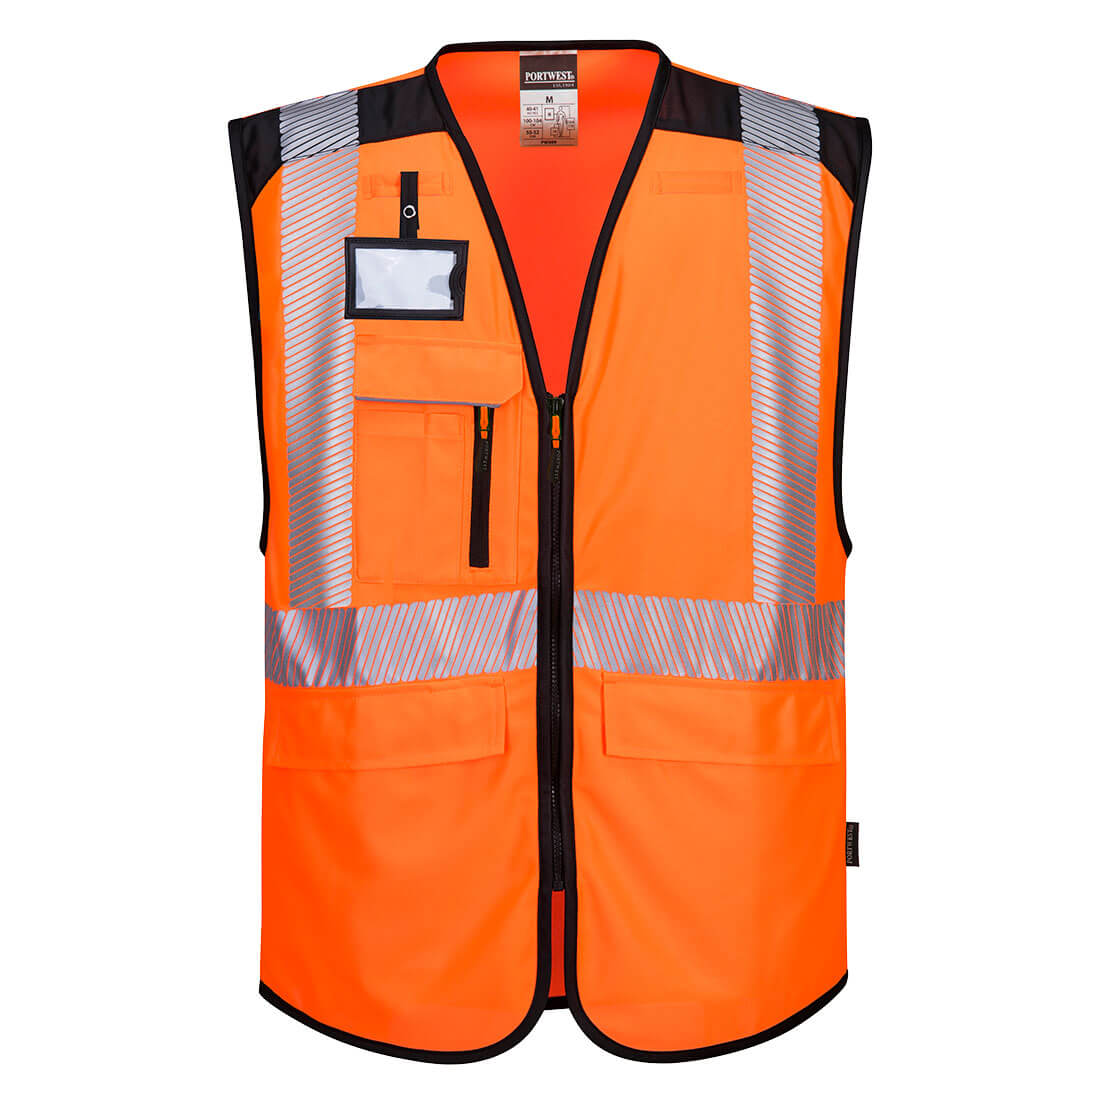 Gilet PW3 in alta visibilità Portwest Executive Vest